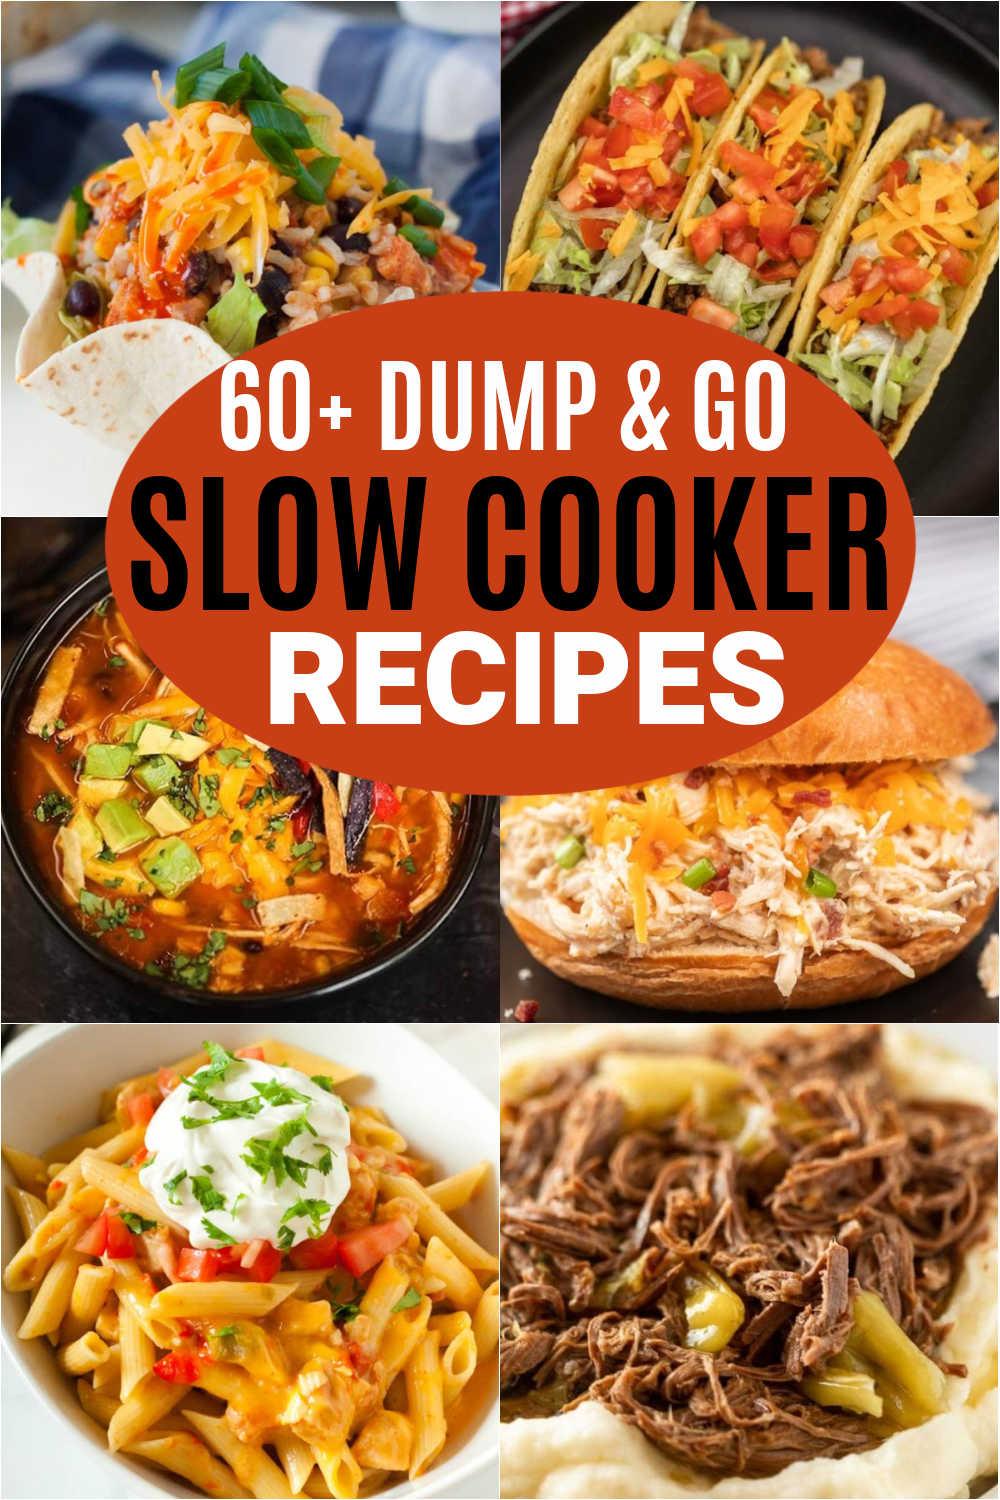 36 Little Dipper Crock Pot Recipes ideas